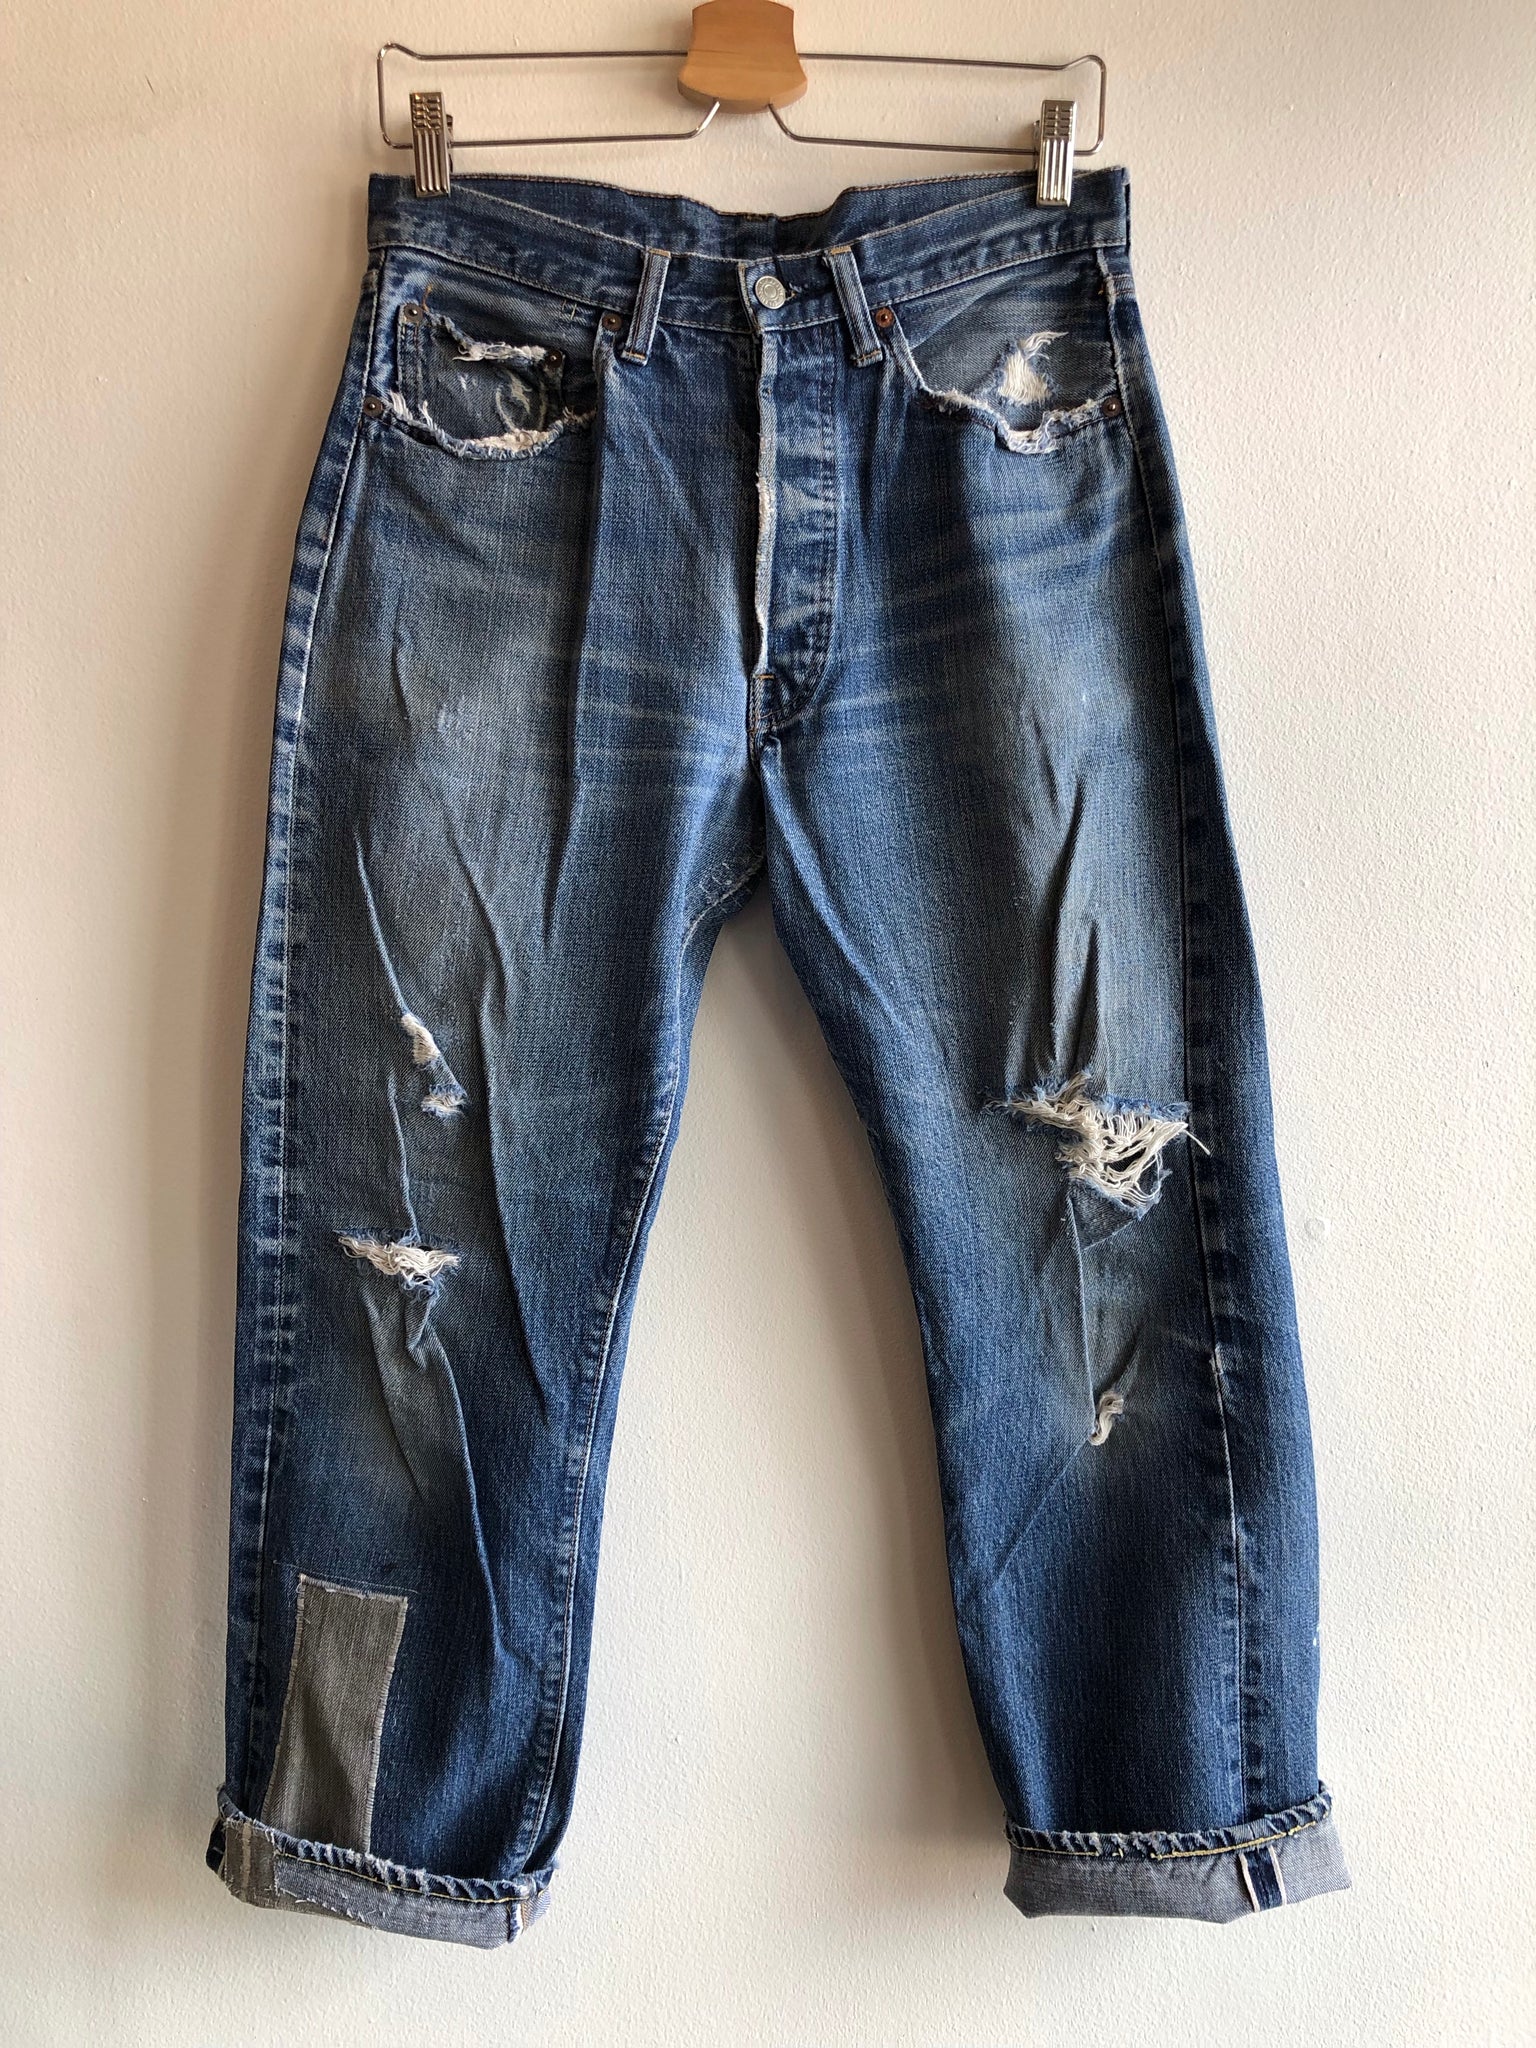 Vintage 1970’s Levi’s 501 Single Stitch Selvedge Denim Jeans